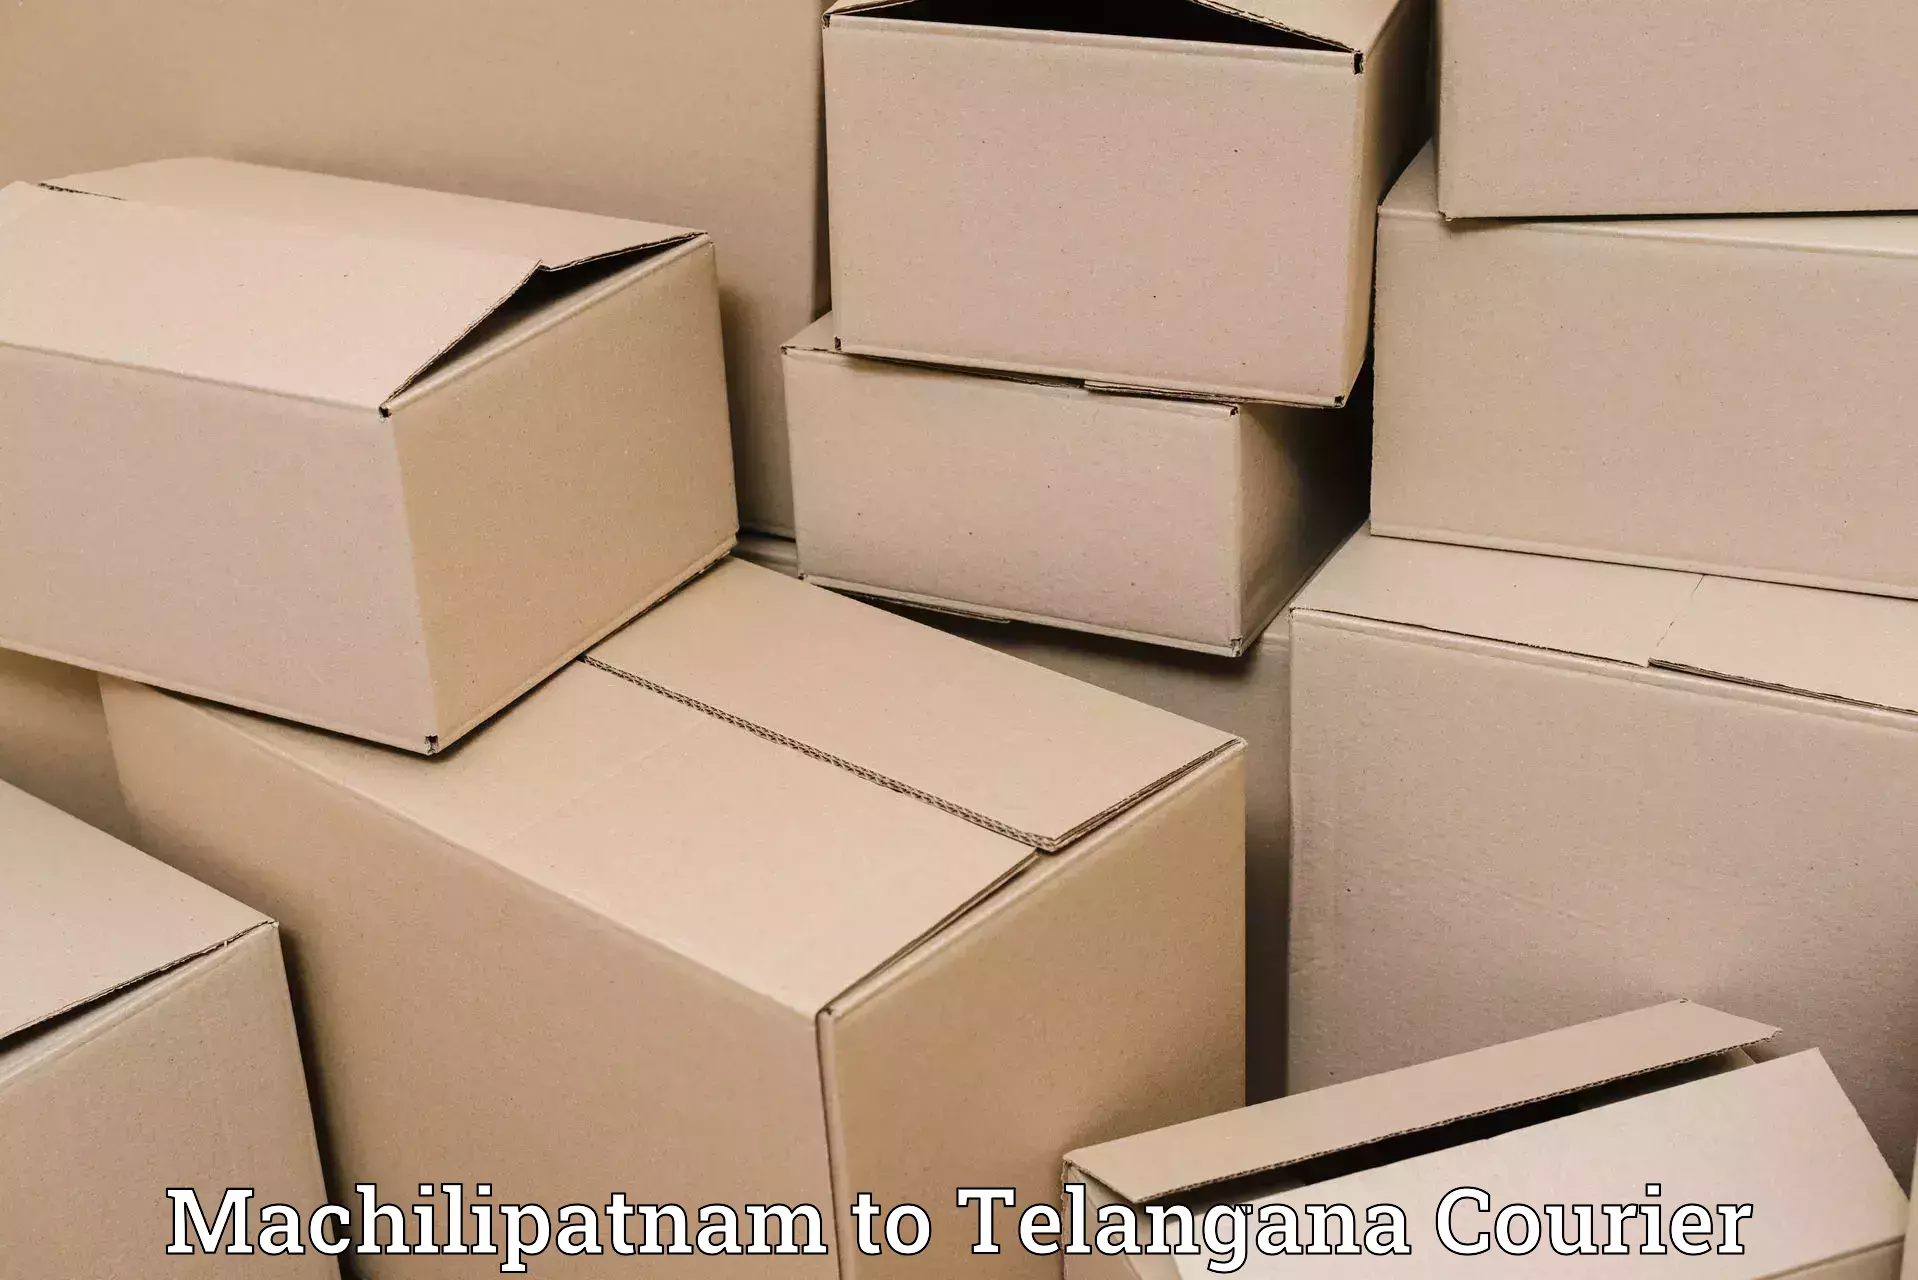 Courier service comparison Machilipatnam to Telangana